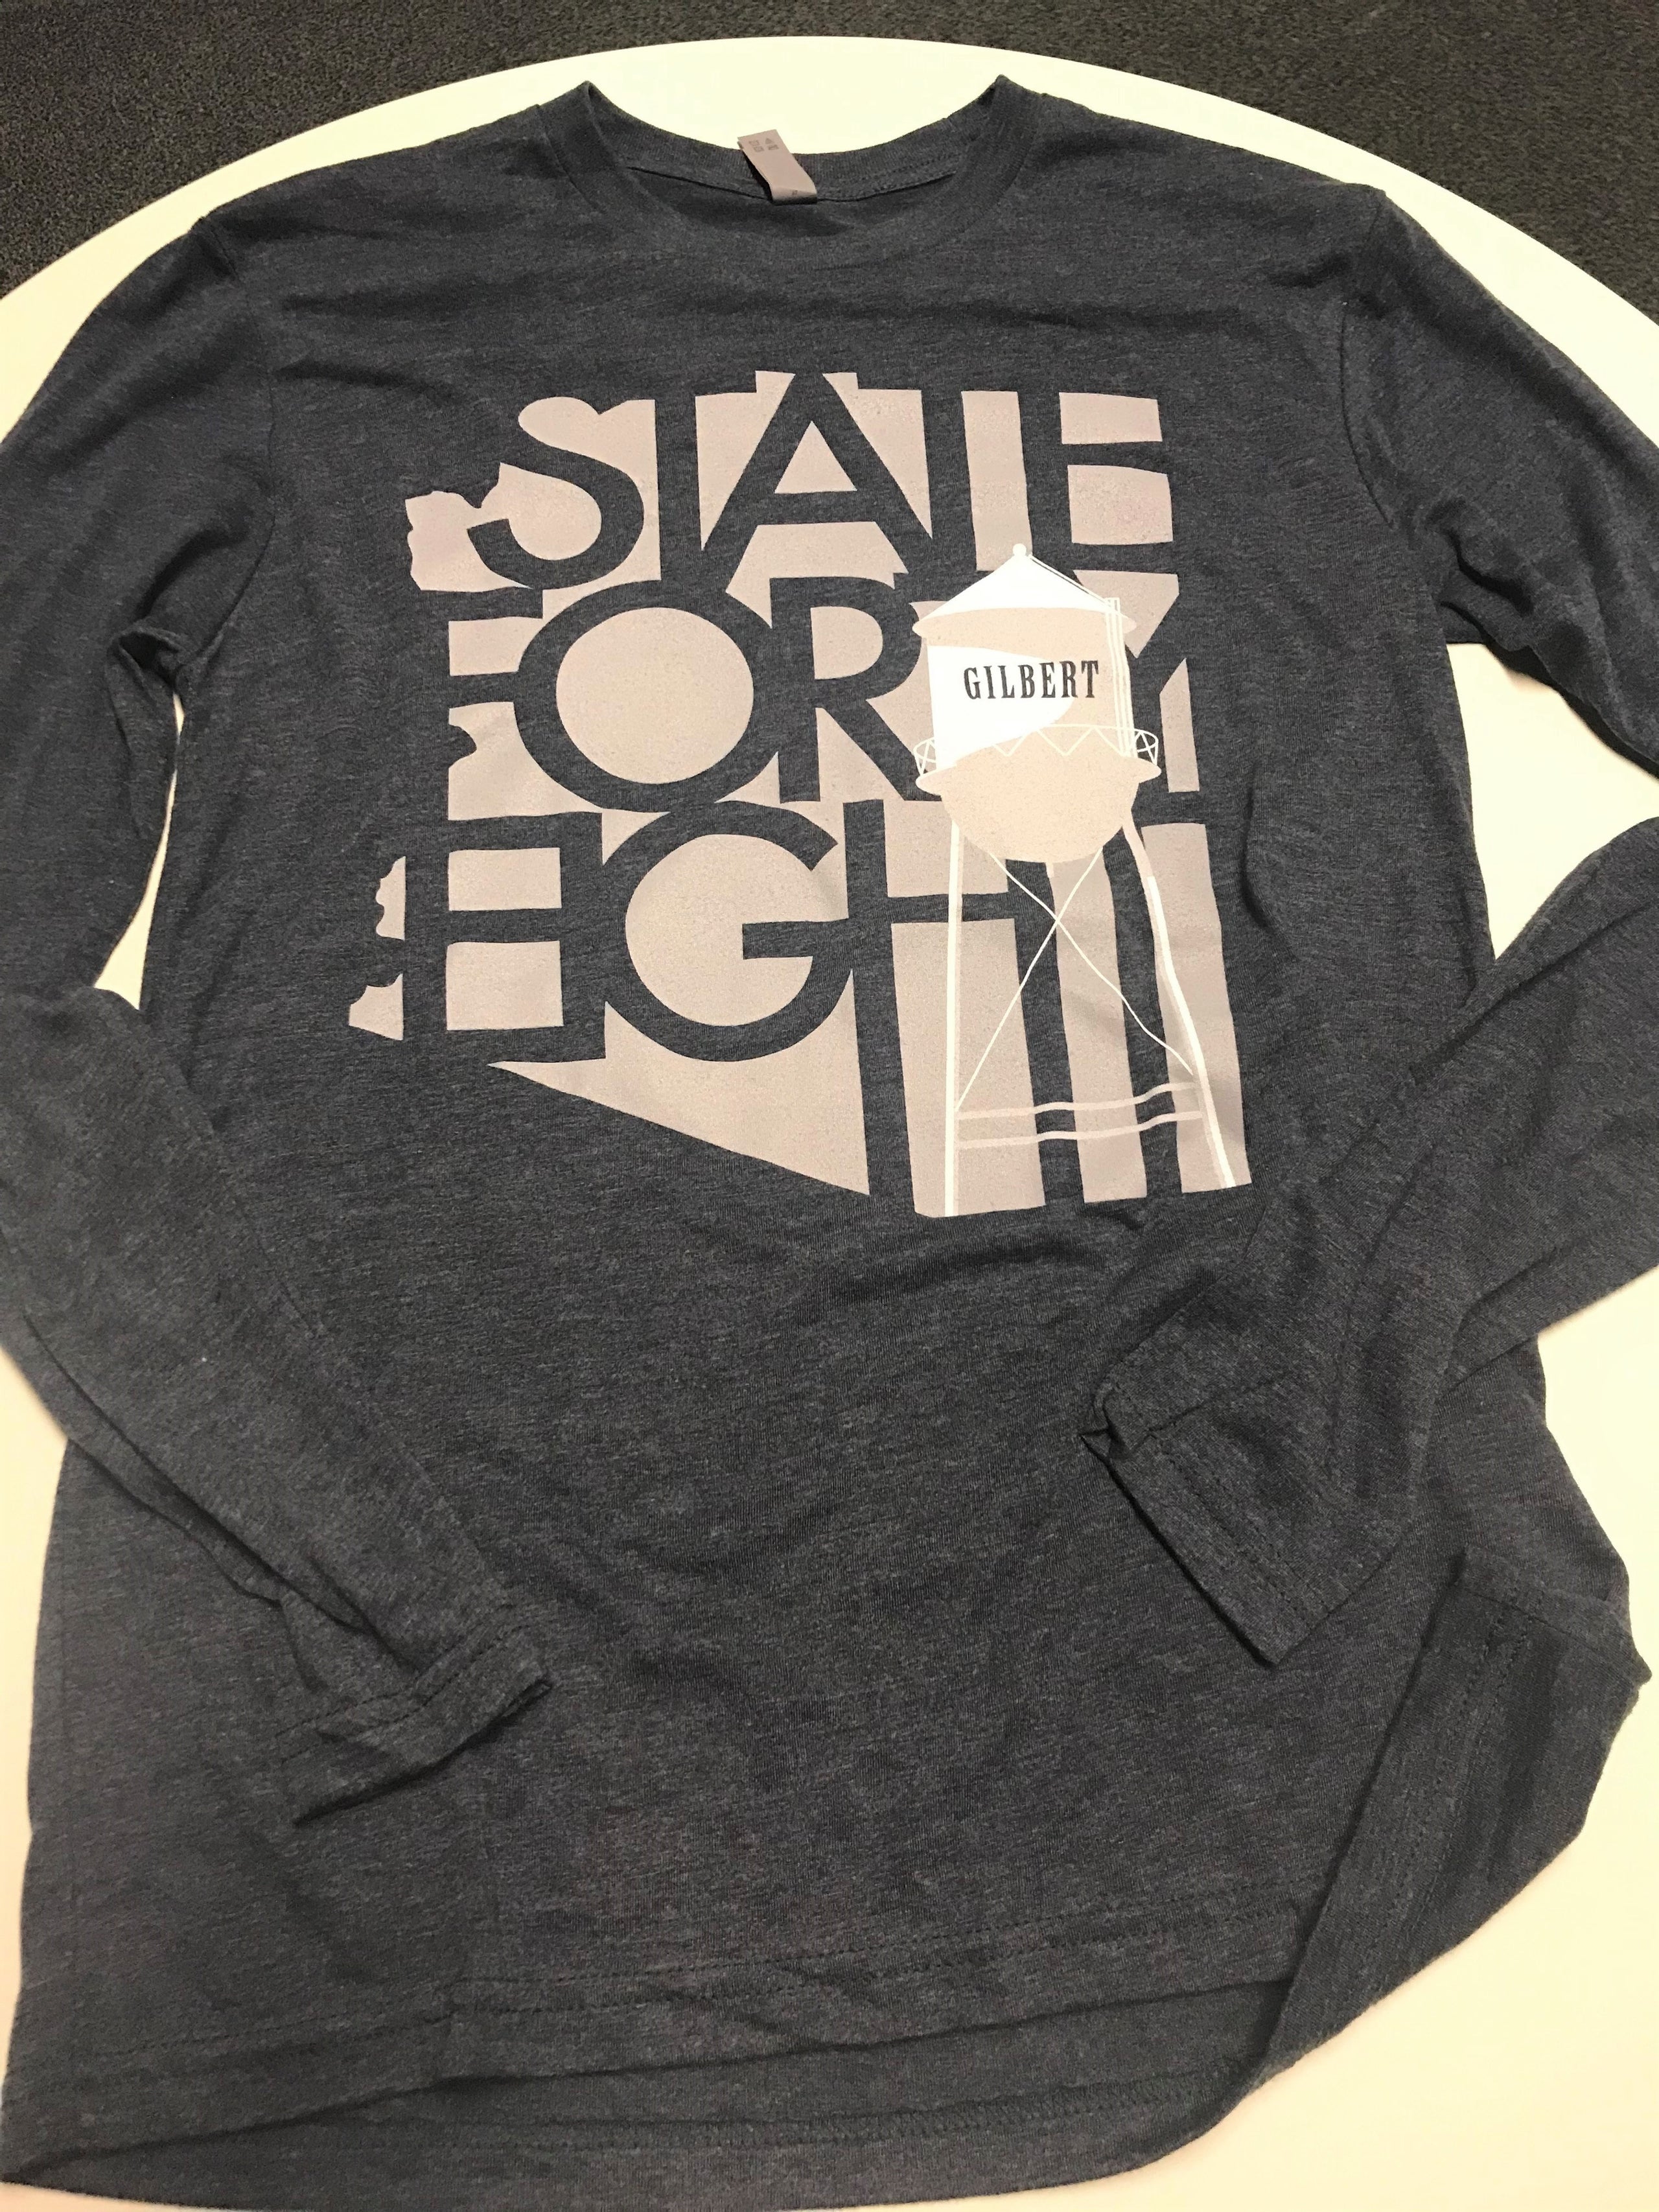 Long Sleeve State Forty Eight shirt | Gilbert, Arizona